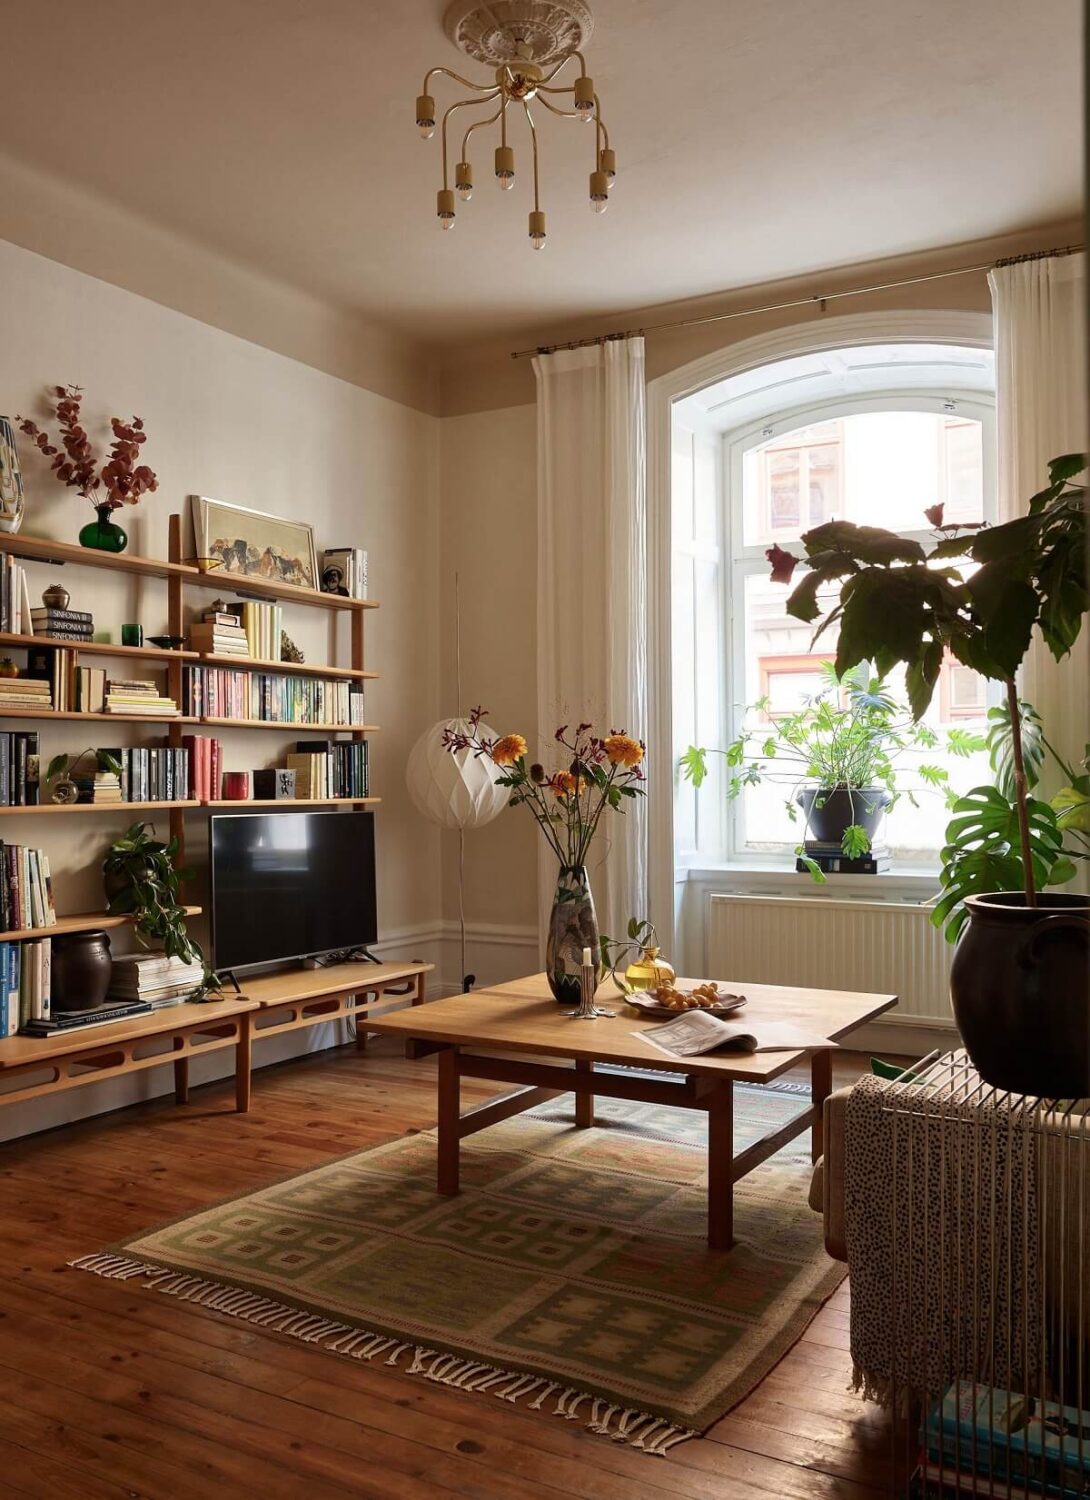 living-room-wooden-floor-painted-ceiling-bookshelves-vintage-style-nordroom